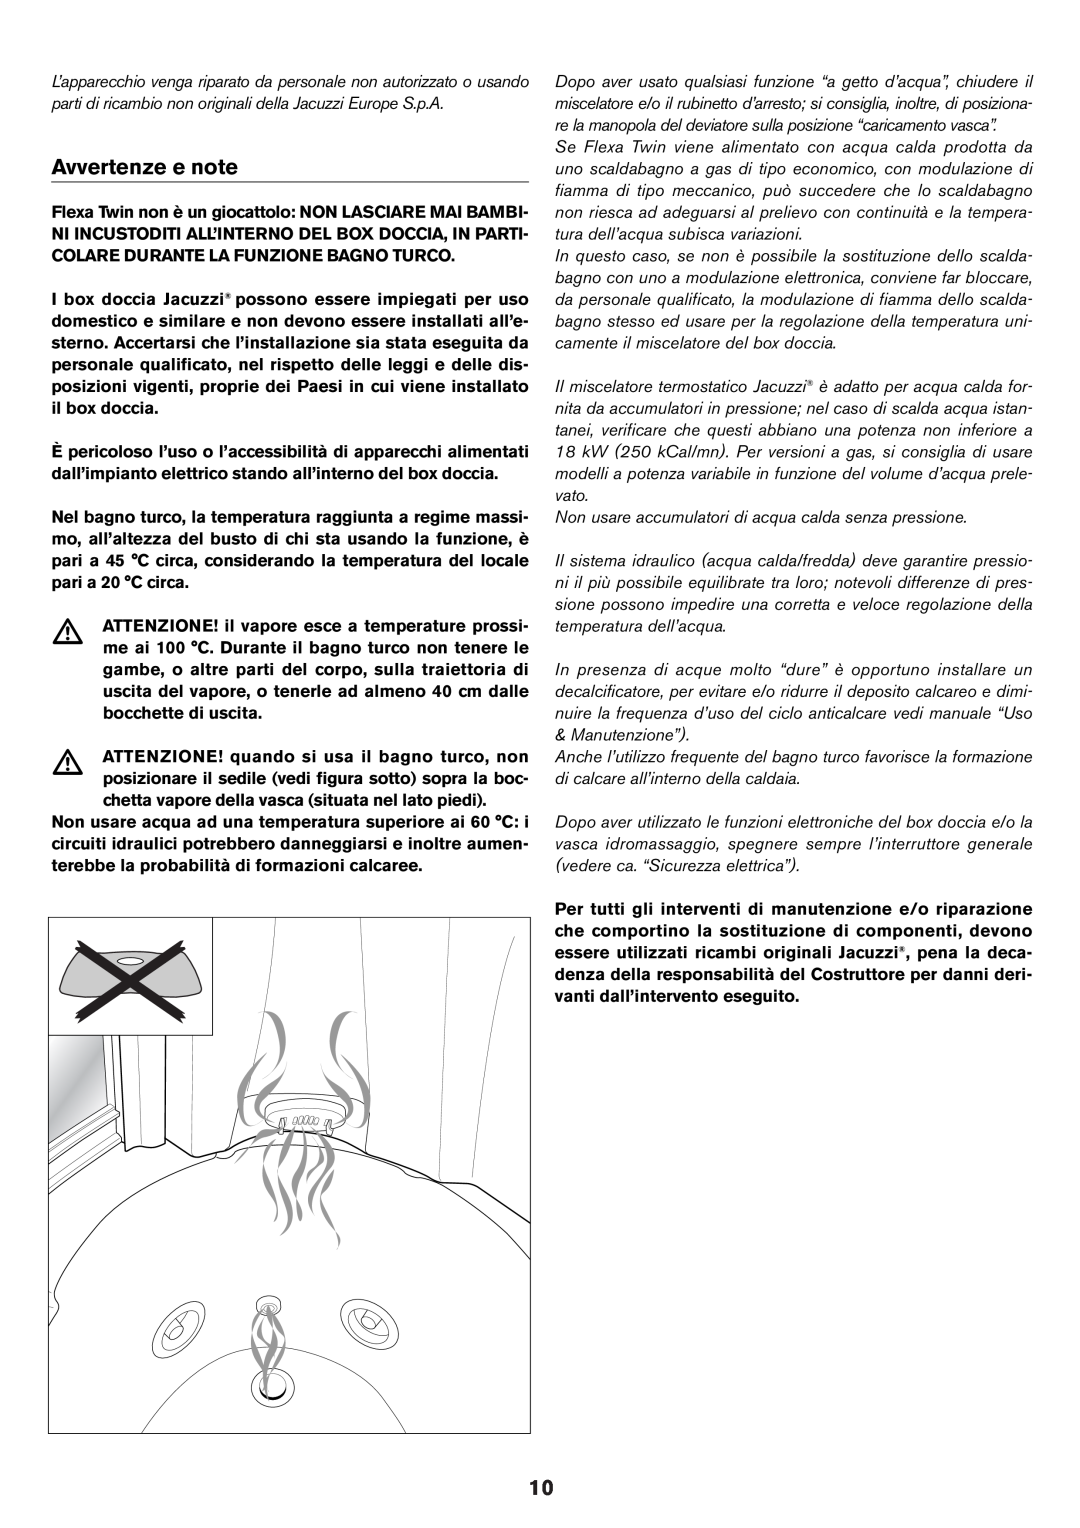 Jacuzzi ELT 10 installation manual Avvertenze e note 